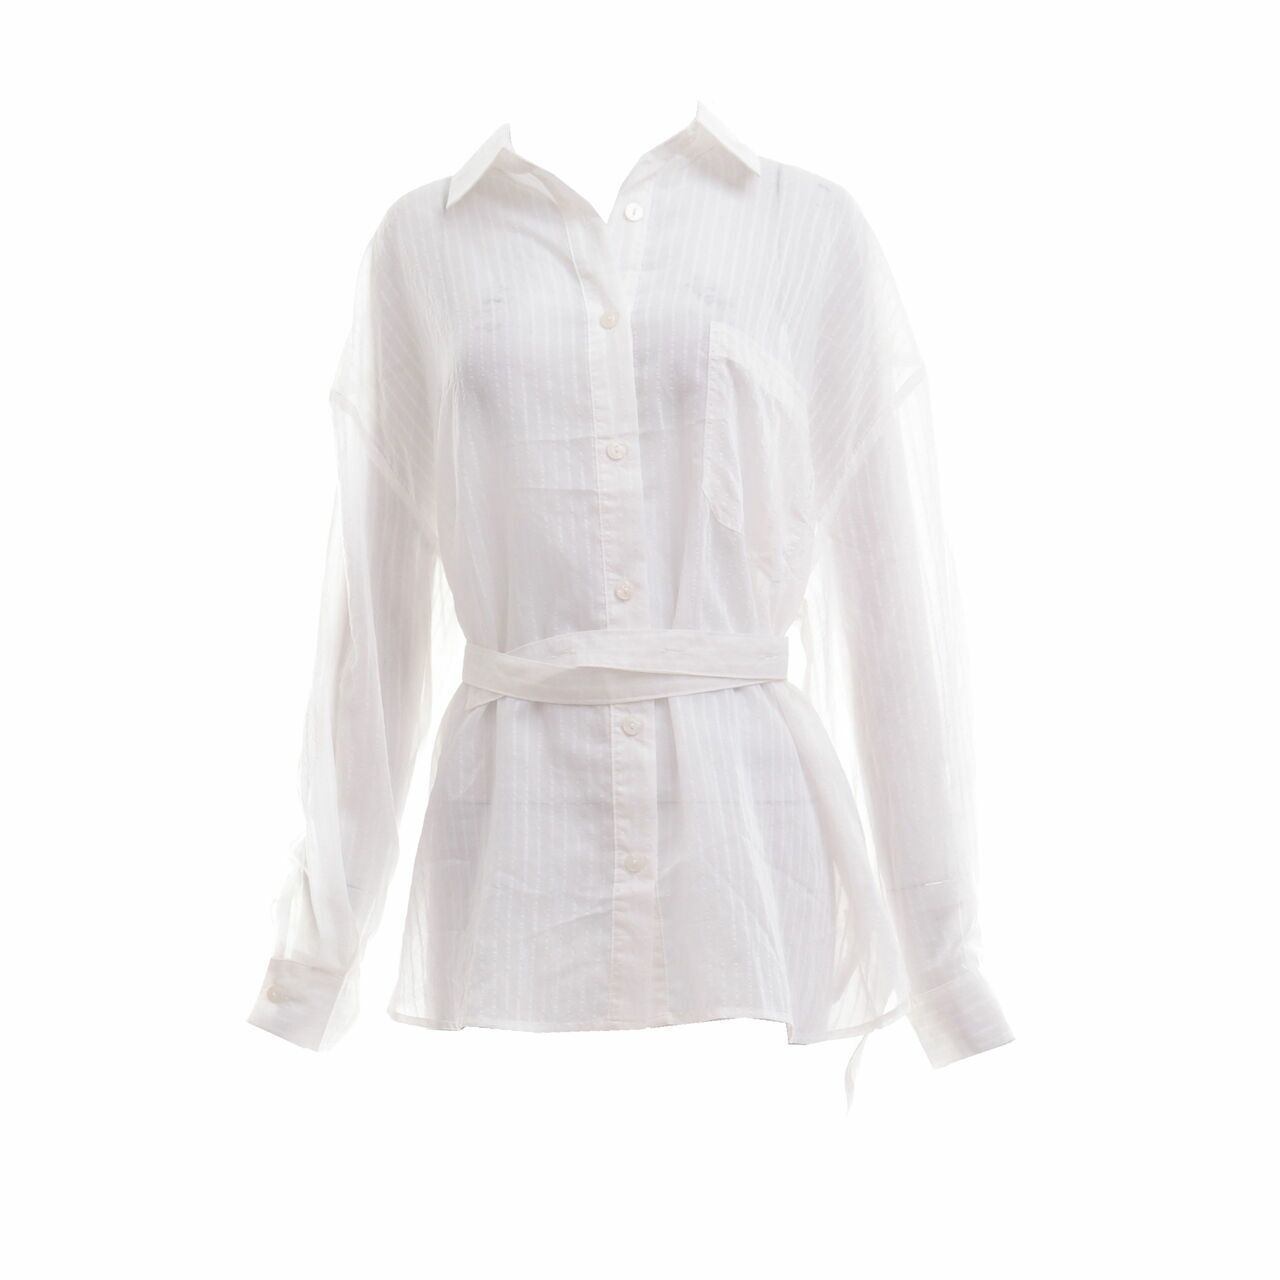 3Mongkis x Ayla Dimitri White Shirt